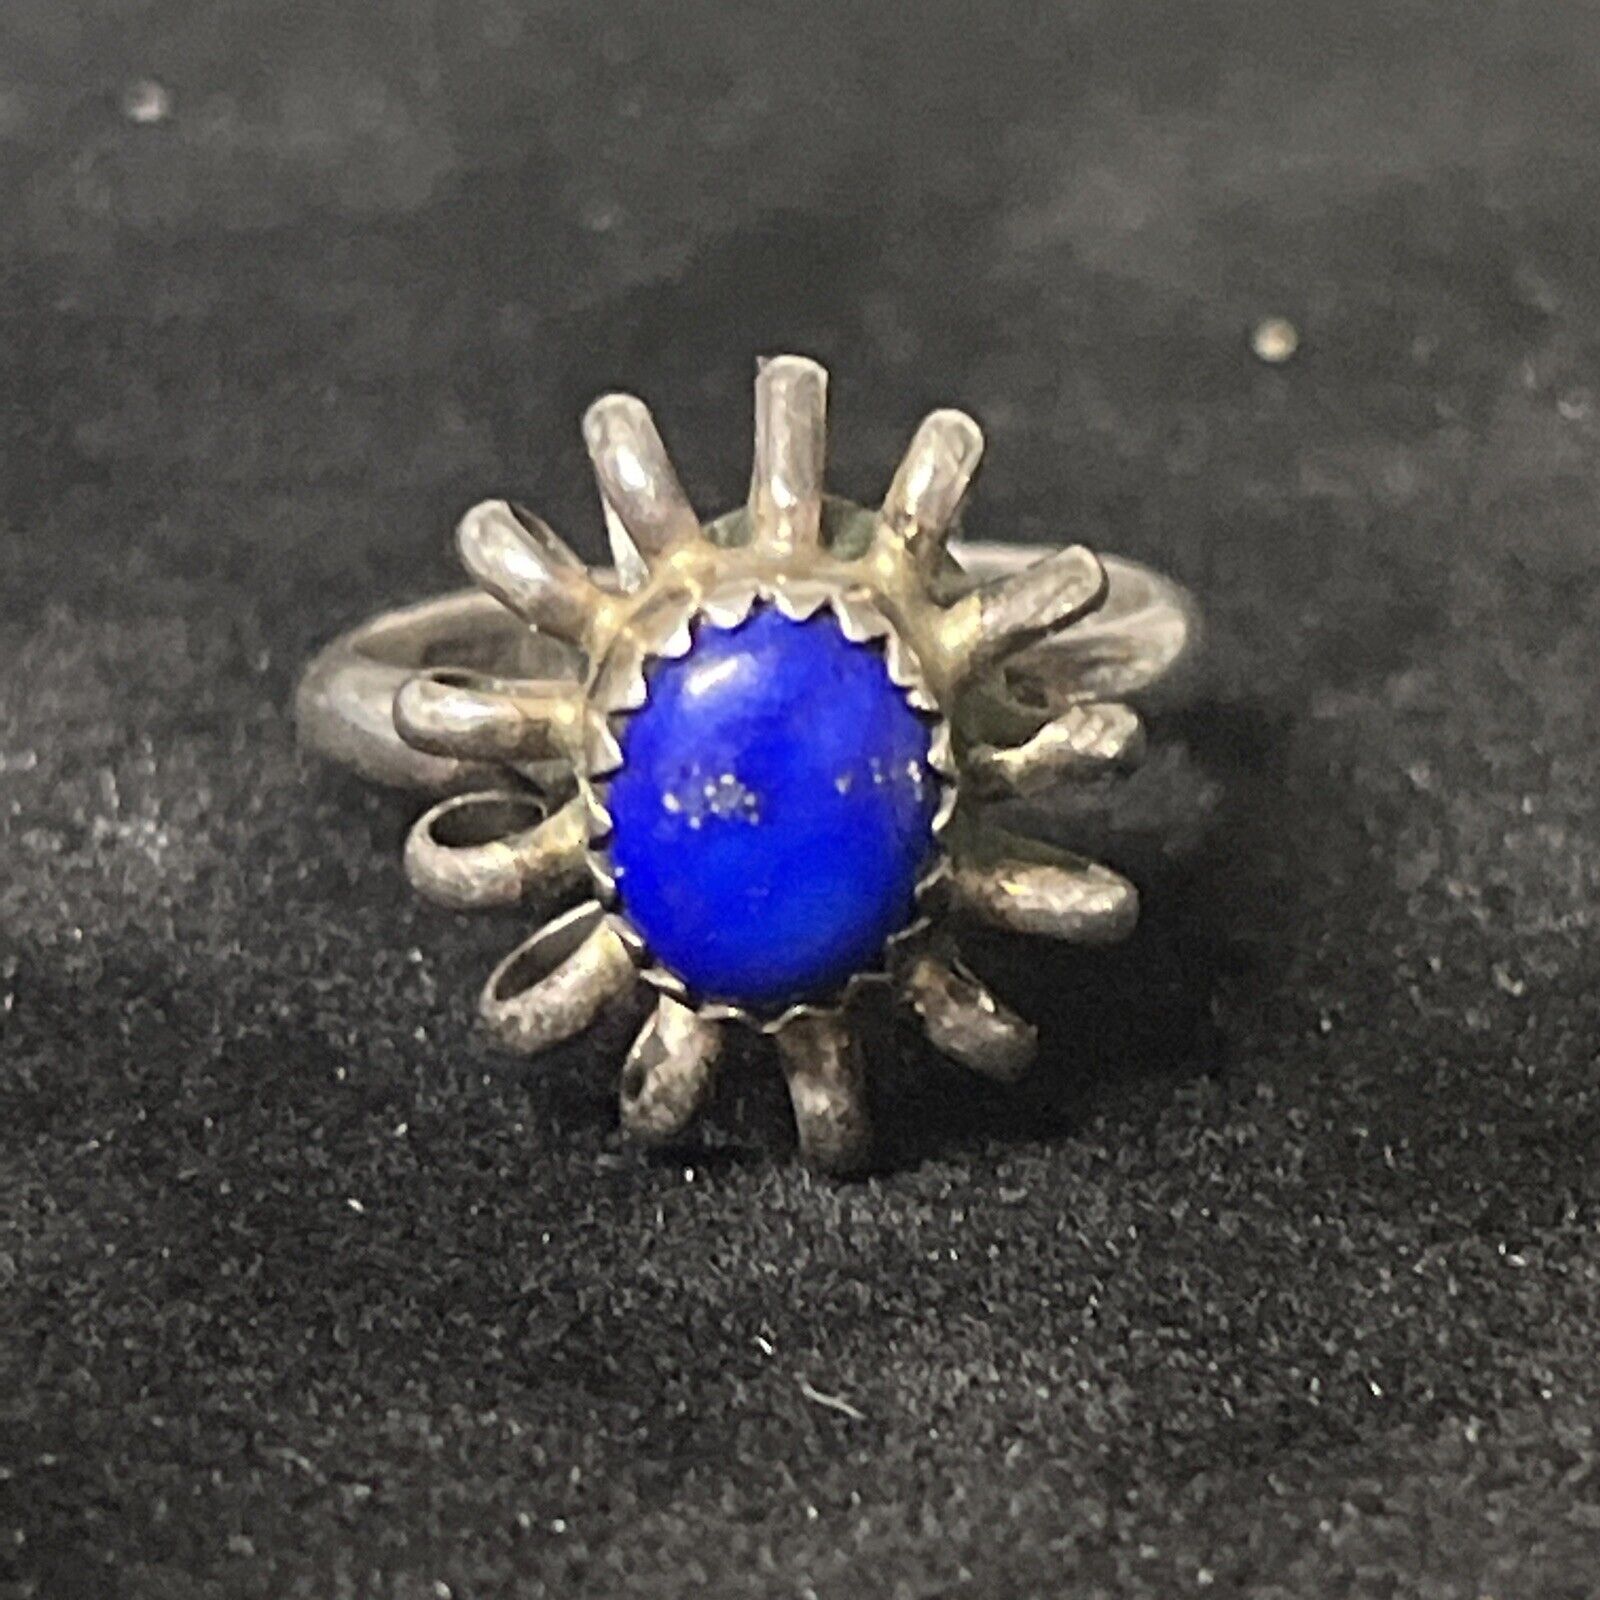 Vintage Navajo Sterling Silver Lapis Lazuli Ring Signed Leonard Notah Size 5.5